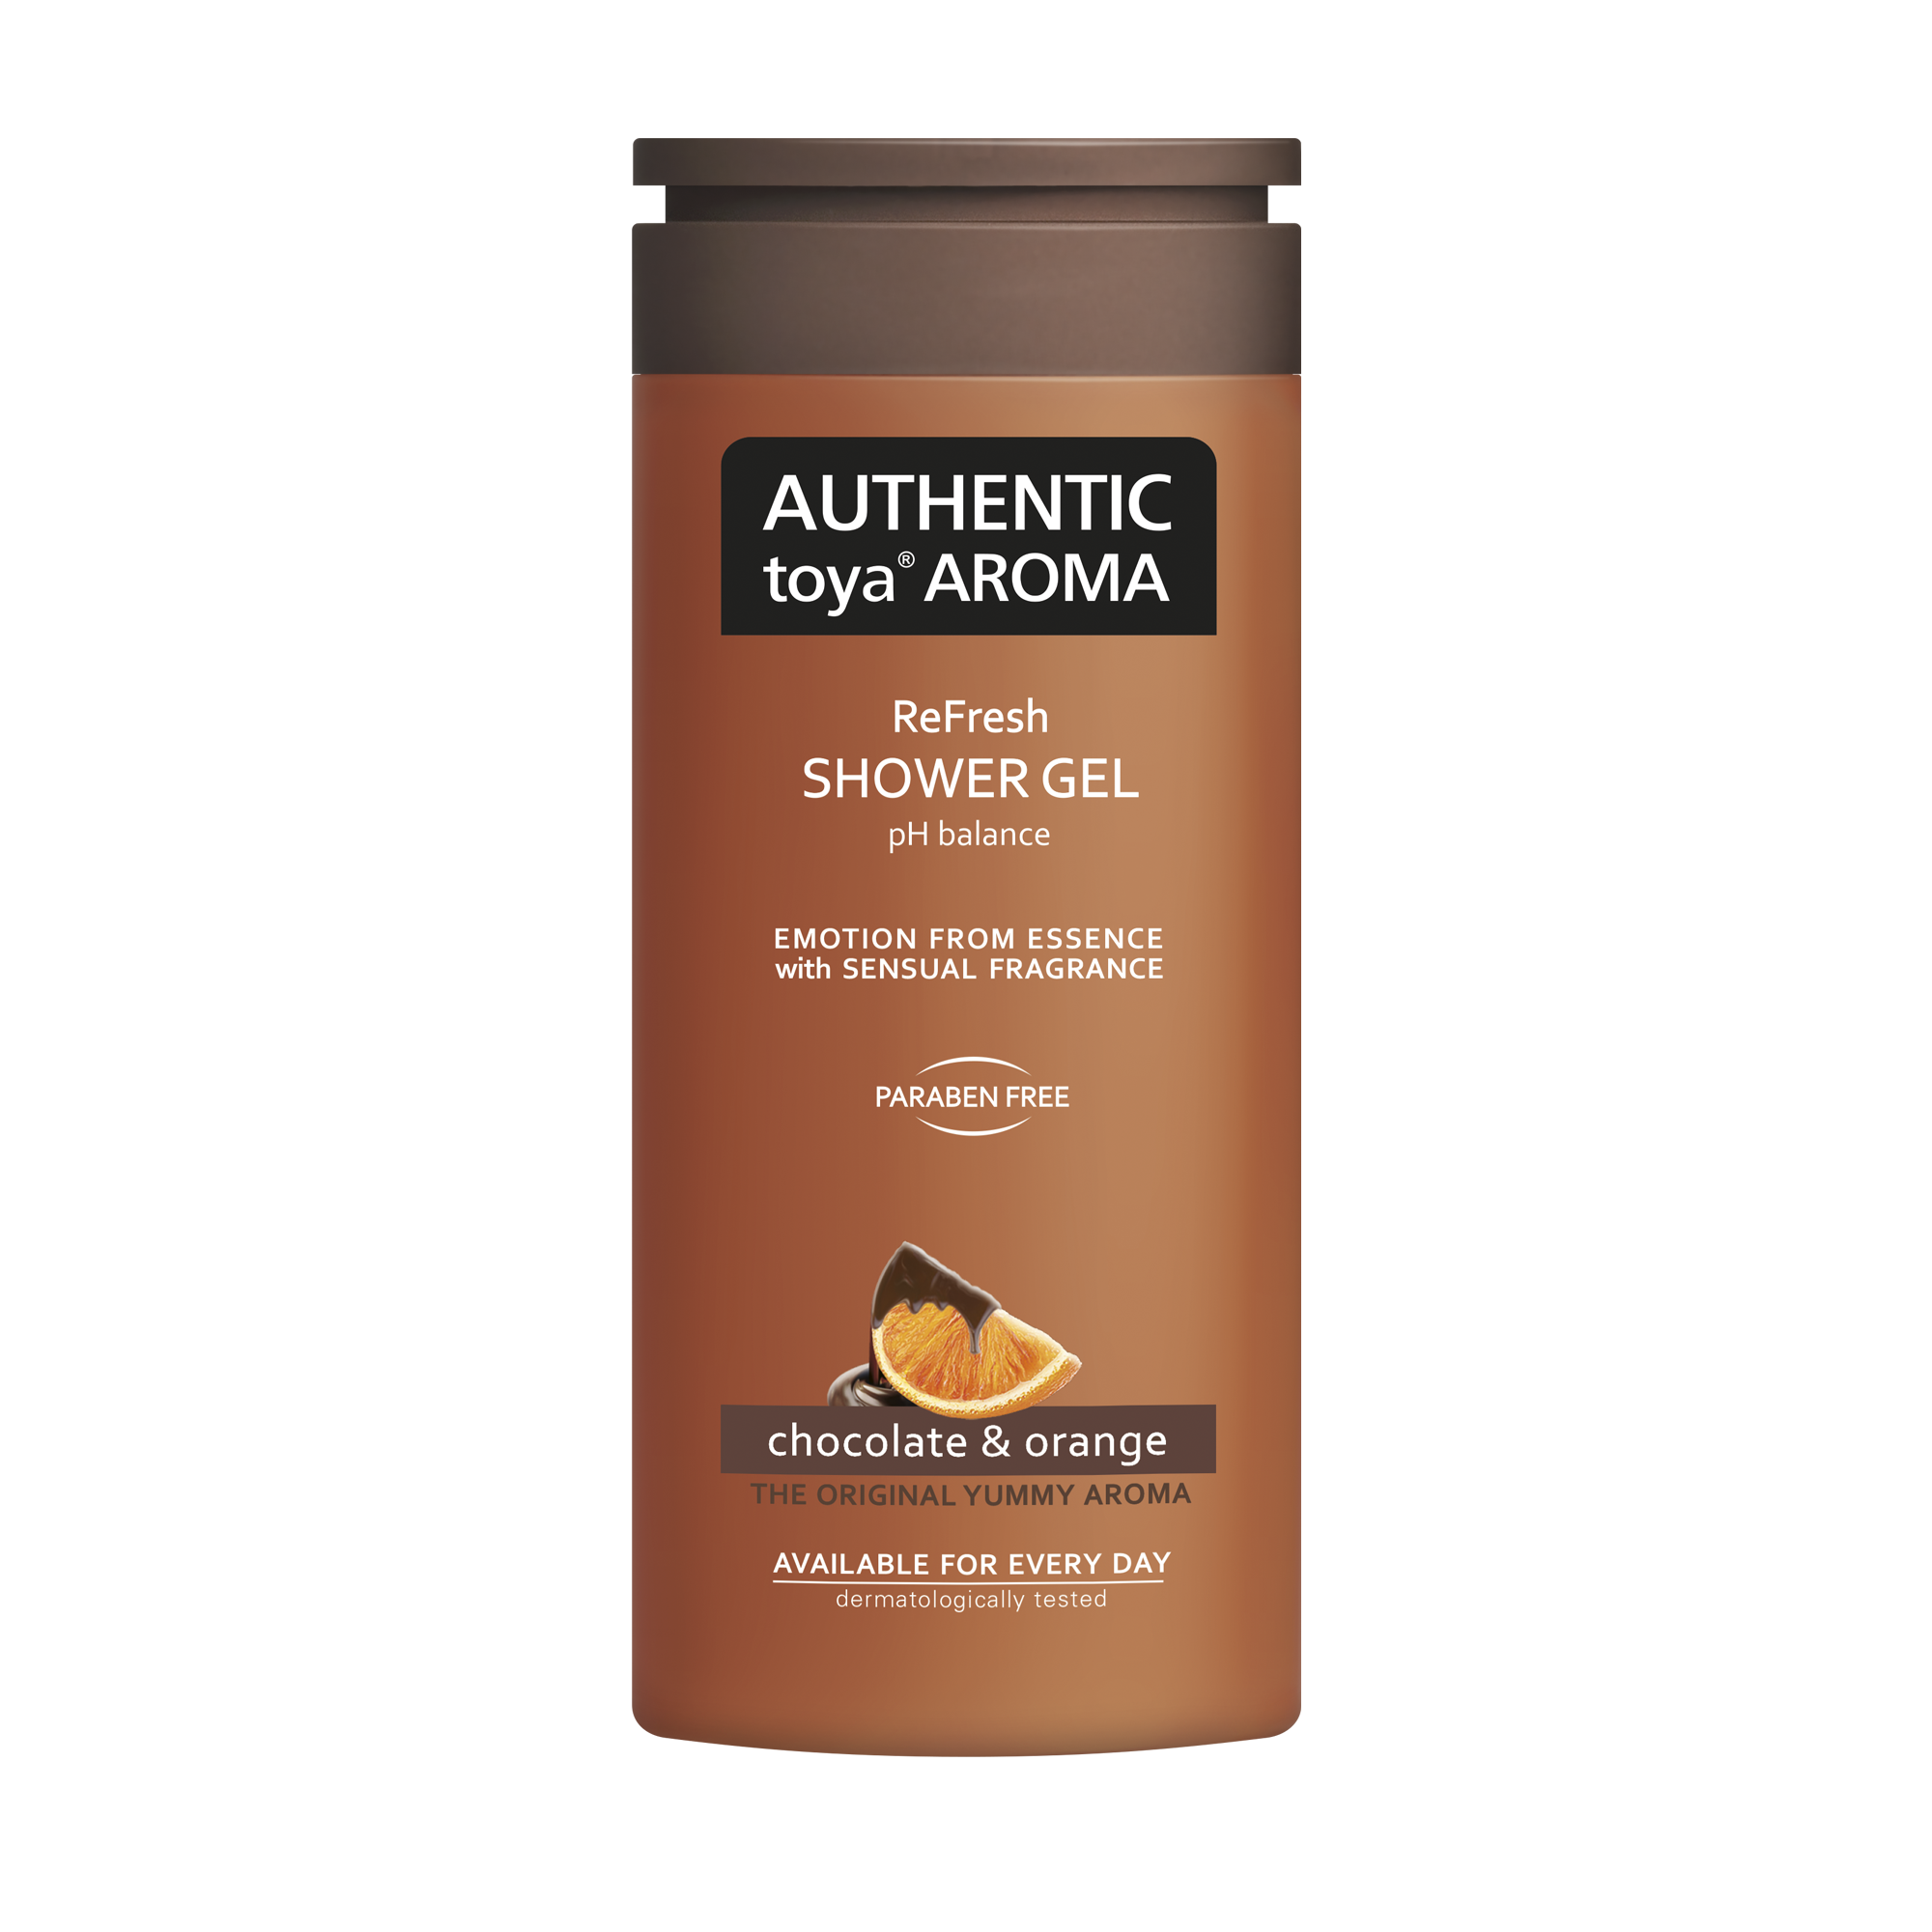 Authentic-toya-aroma-chocolate-orange_1